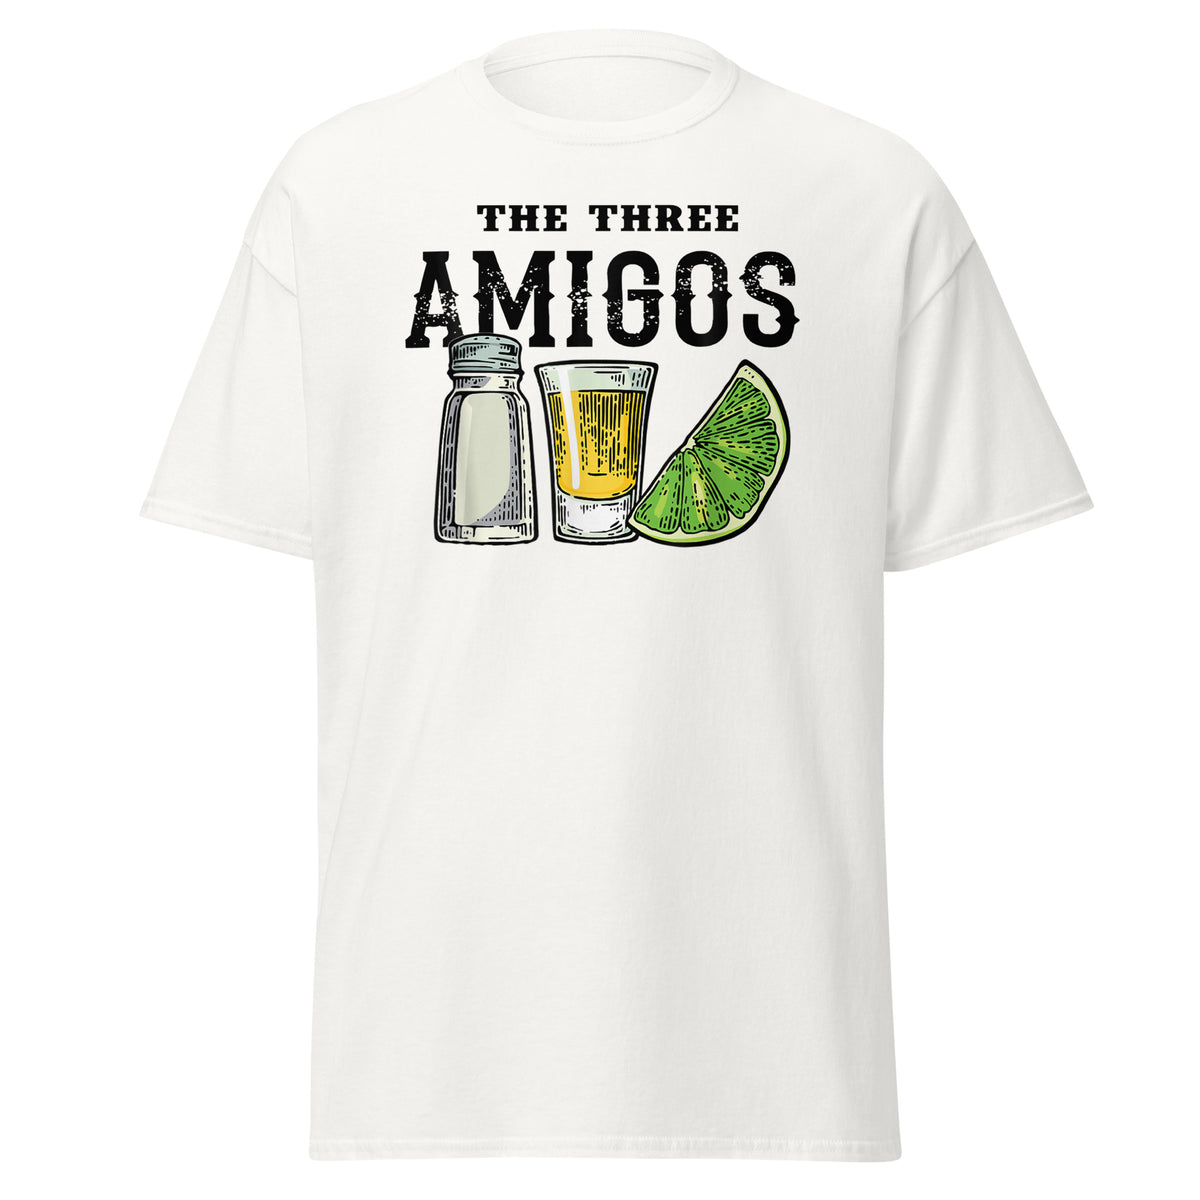 Tres Amigos T-Shirt